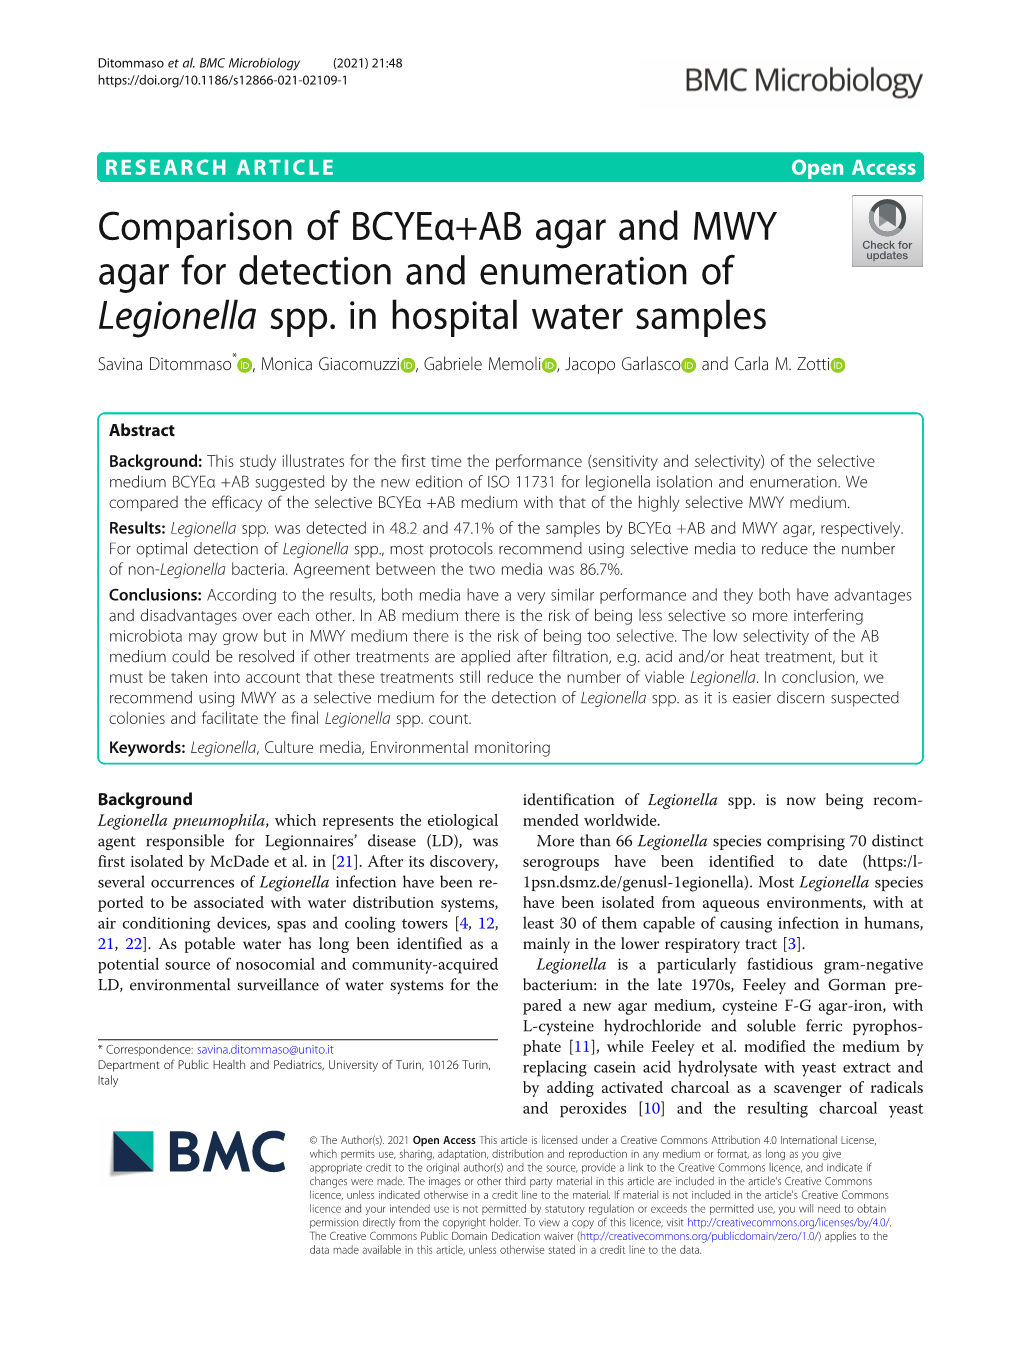 Comparison of Bcyeα+AB Agar and MWY Agar for Detection and Enumeration of Legionella Spp